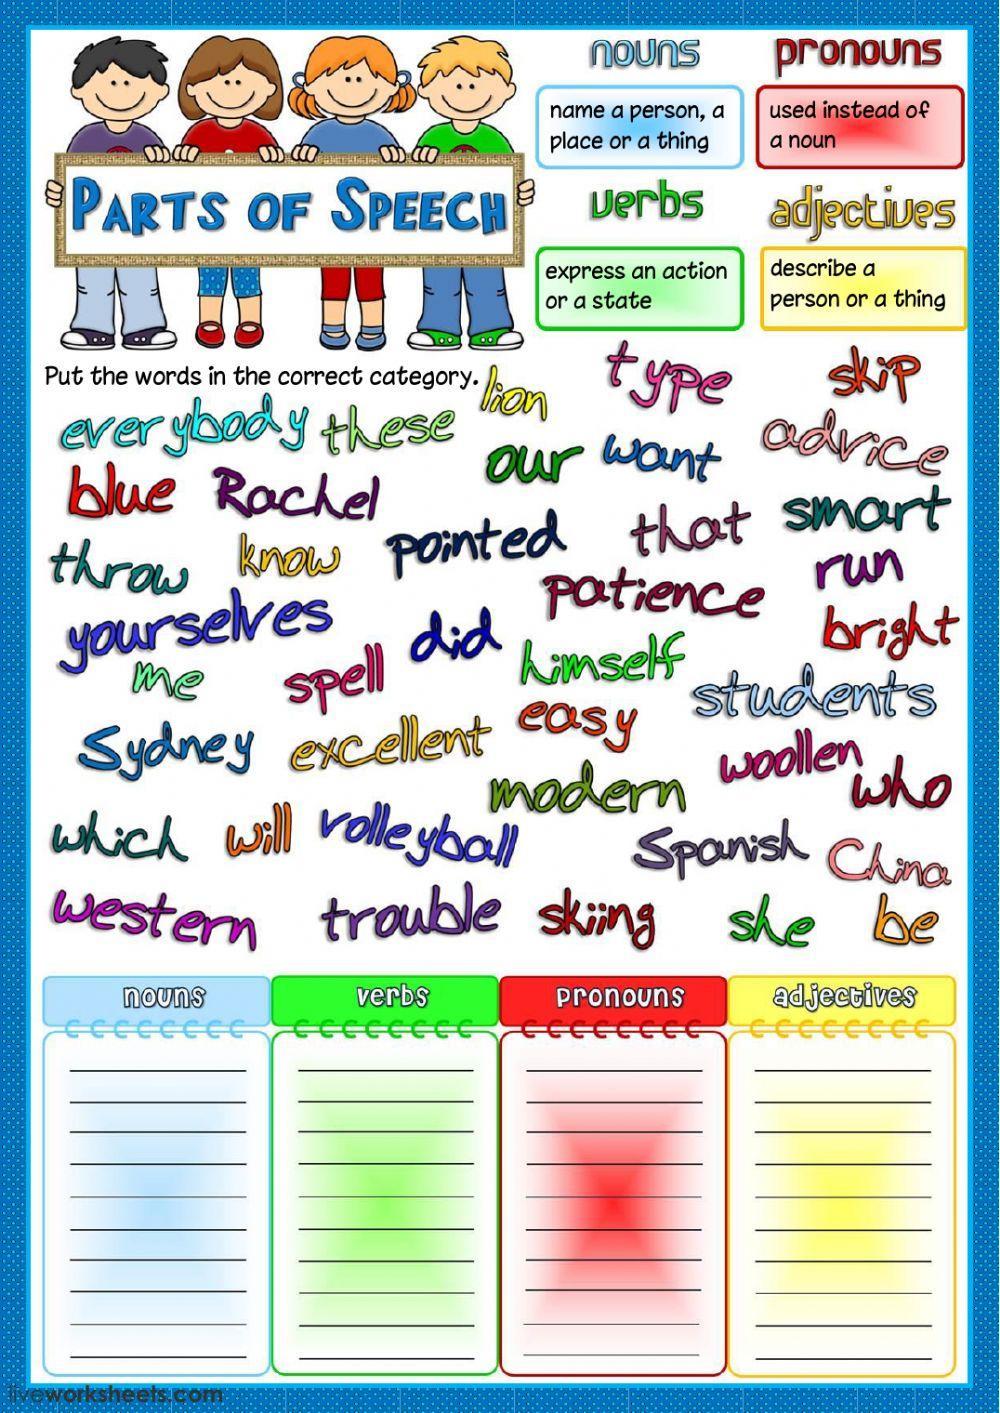 Parts of speech - nouns, pronouns, verbs, adjectives